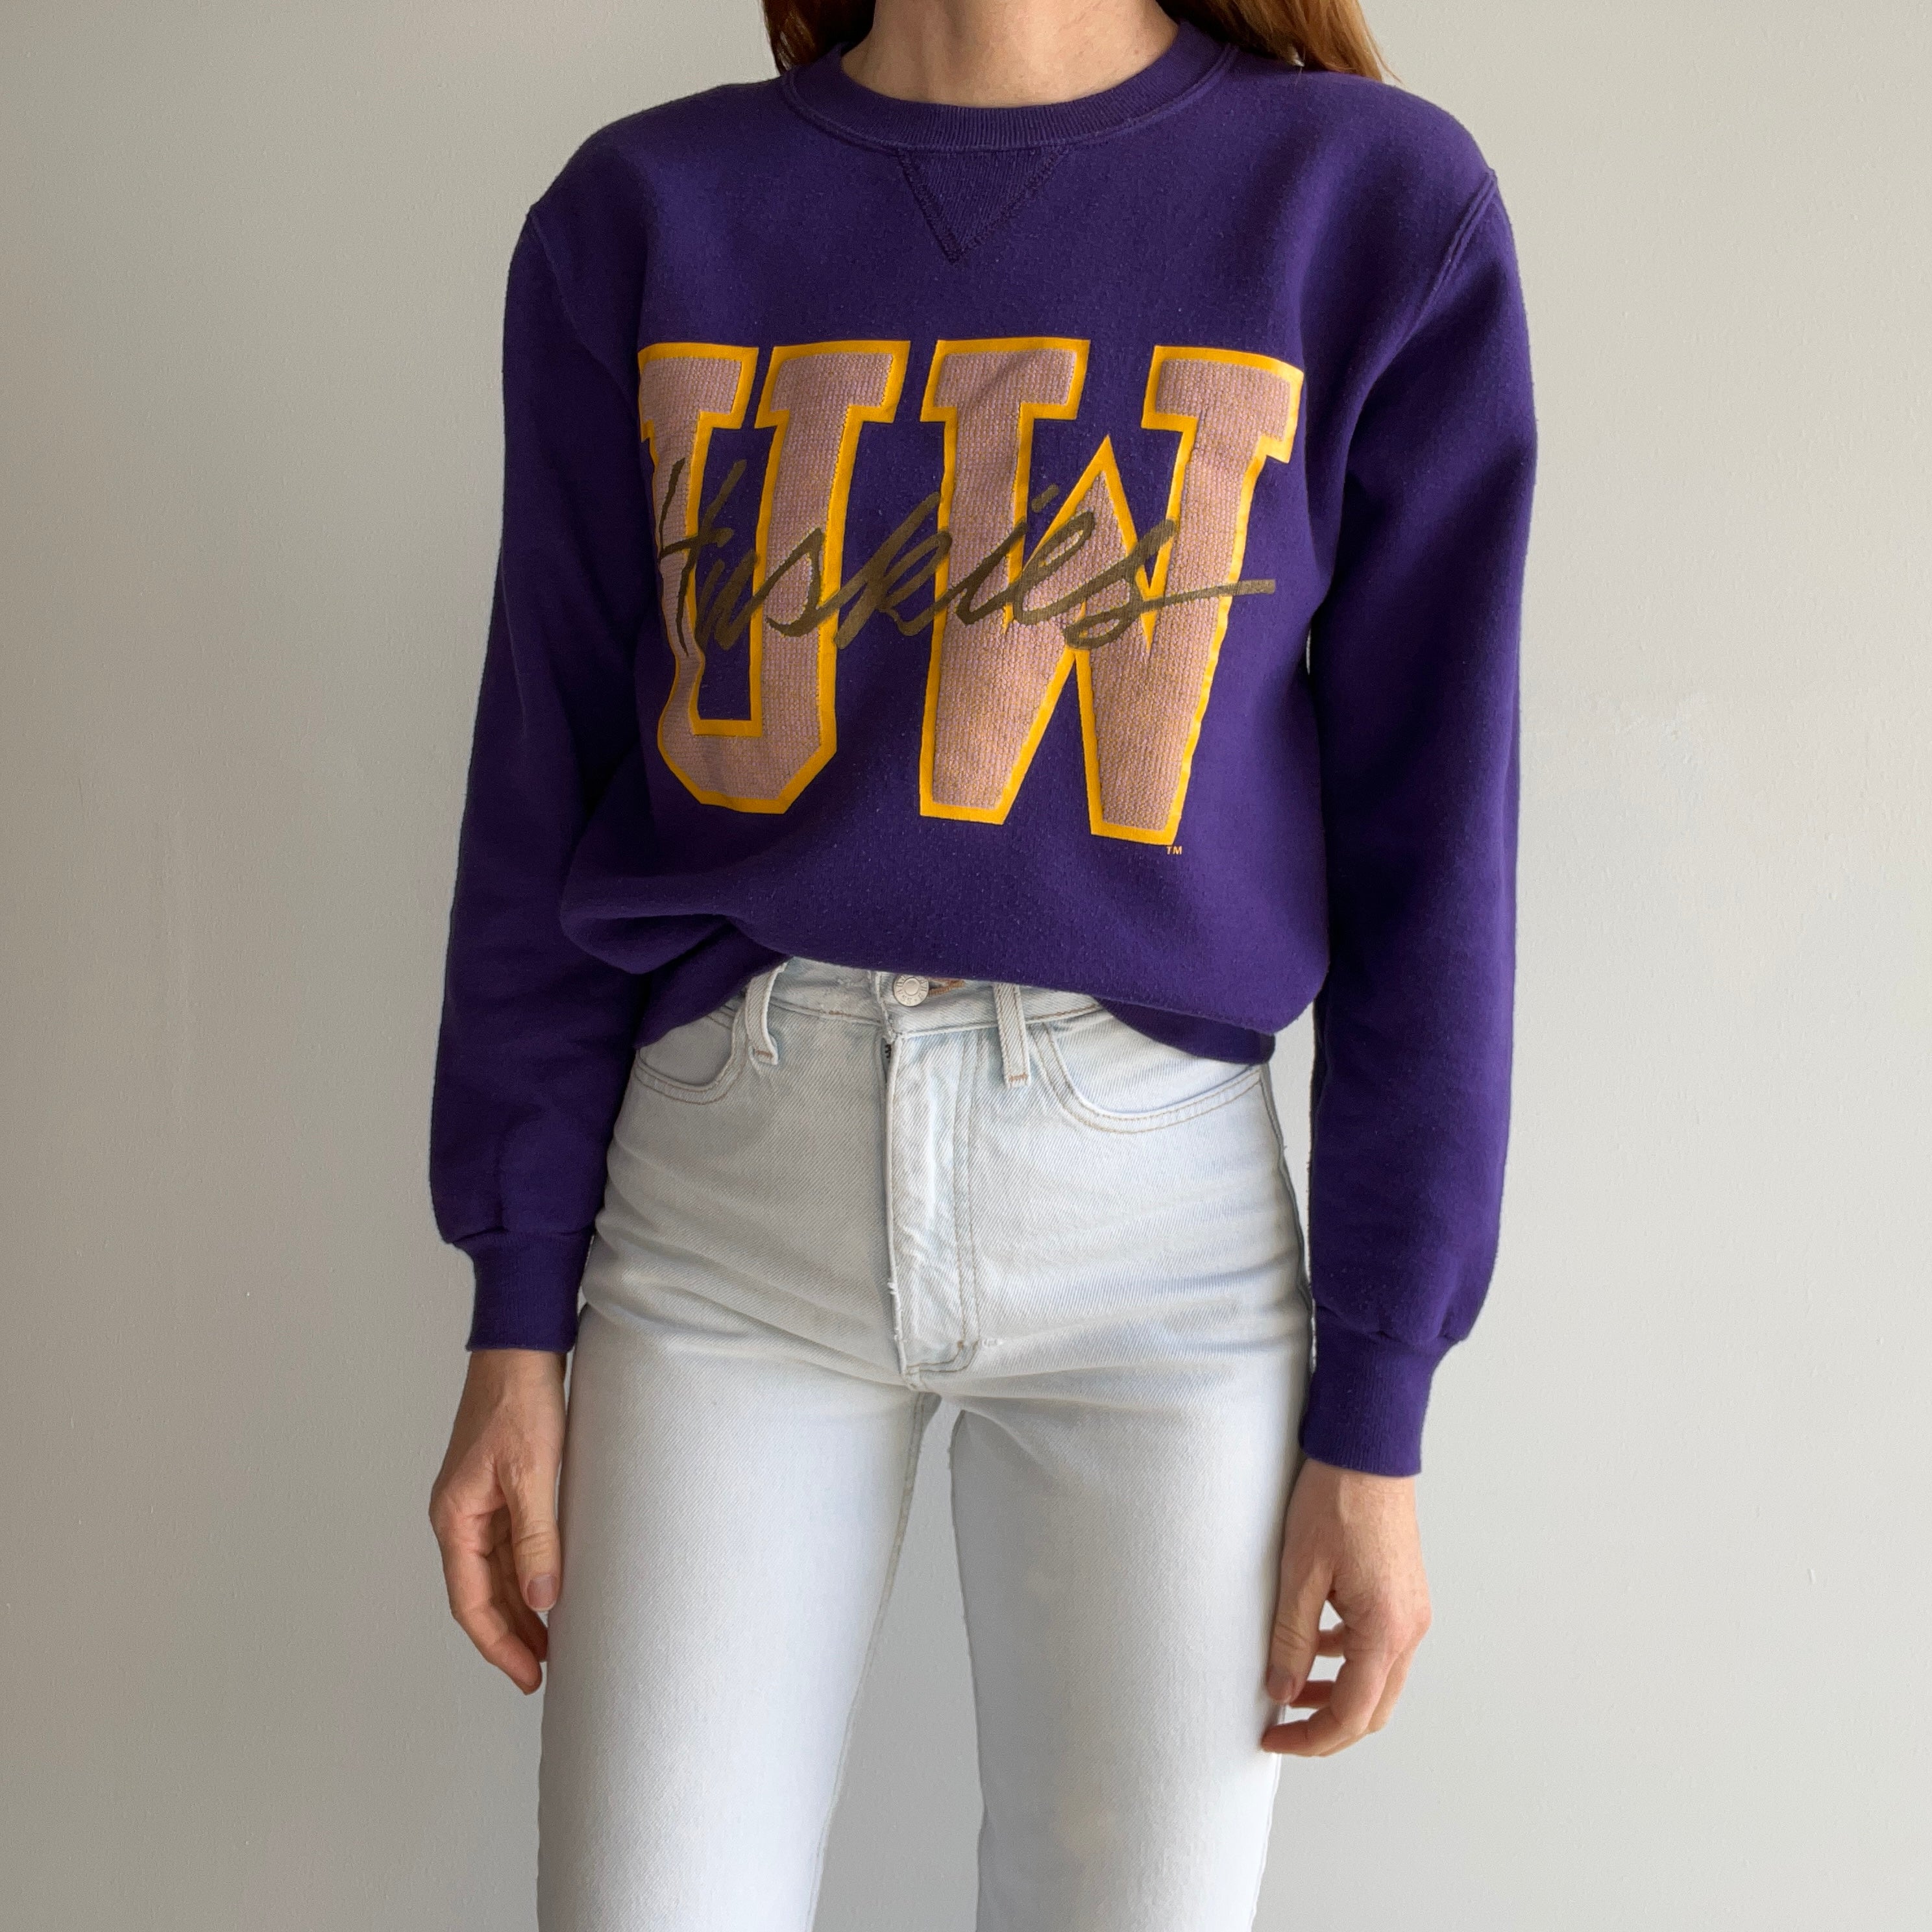 1980/90s University of Washington Huskers Sweatshirt by Russell